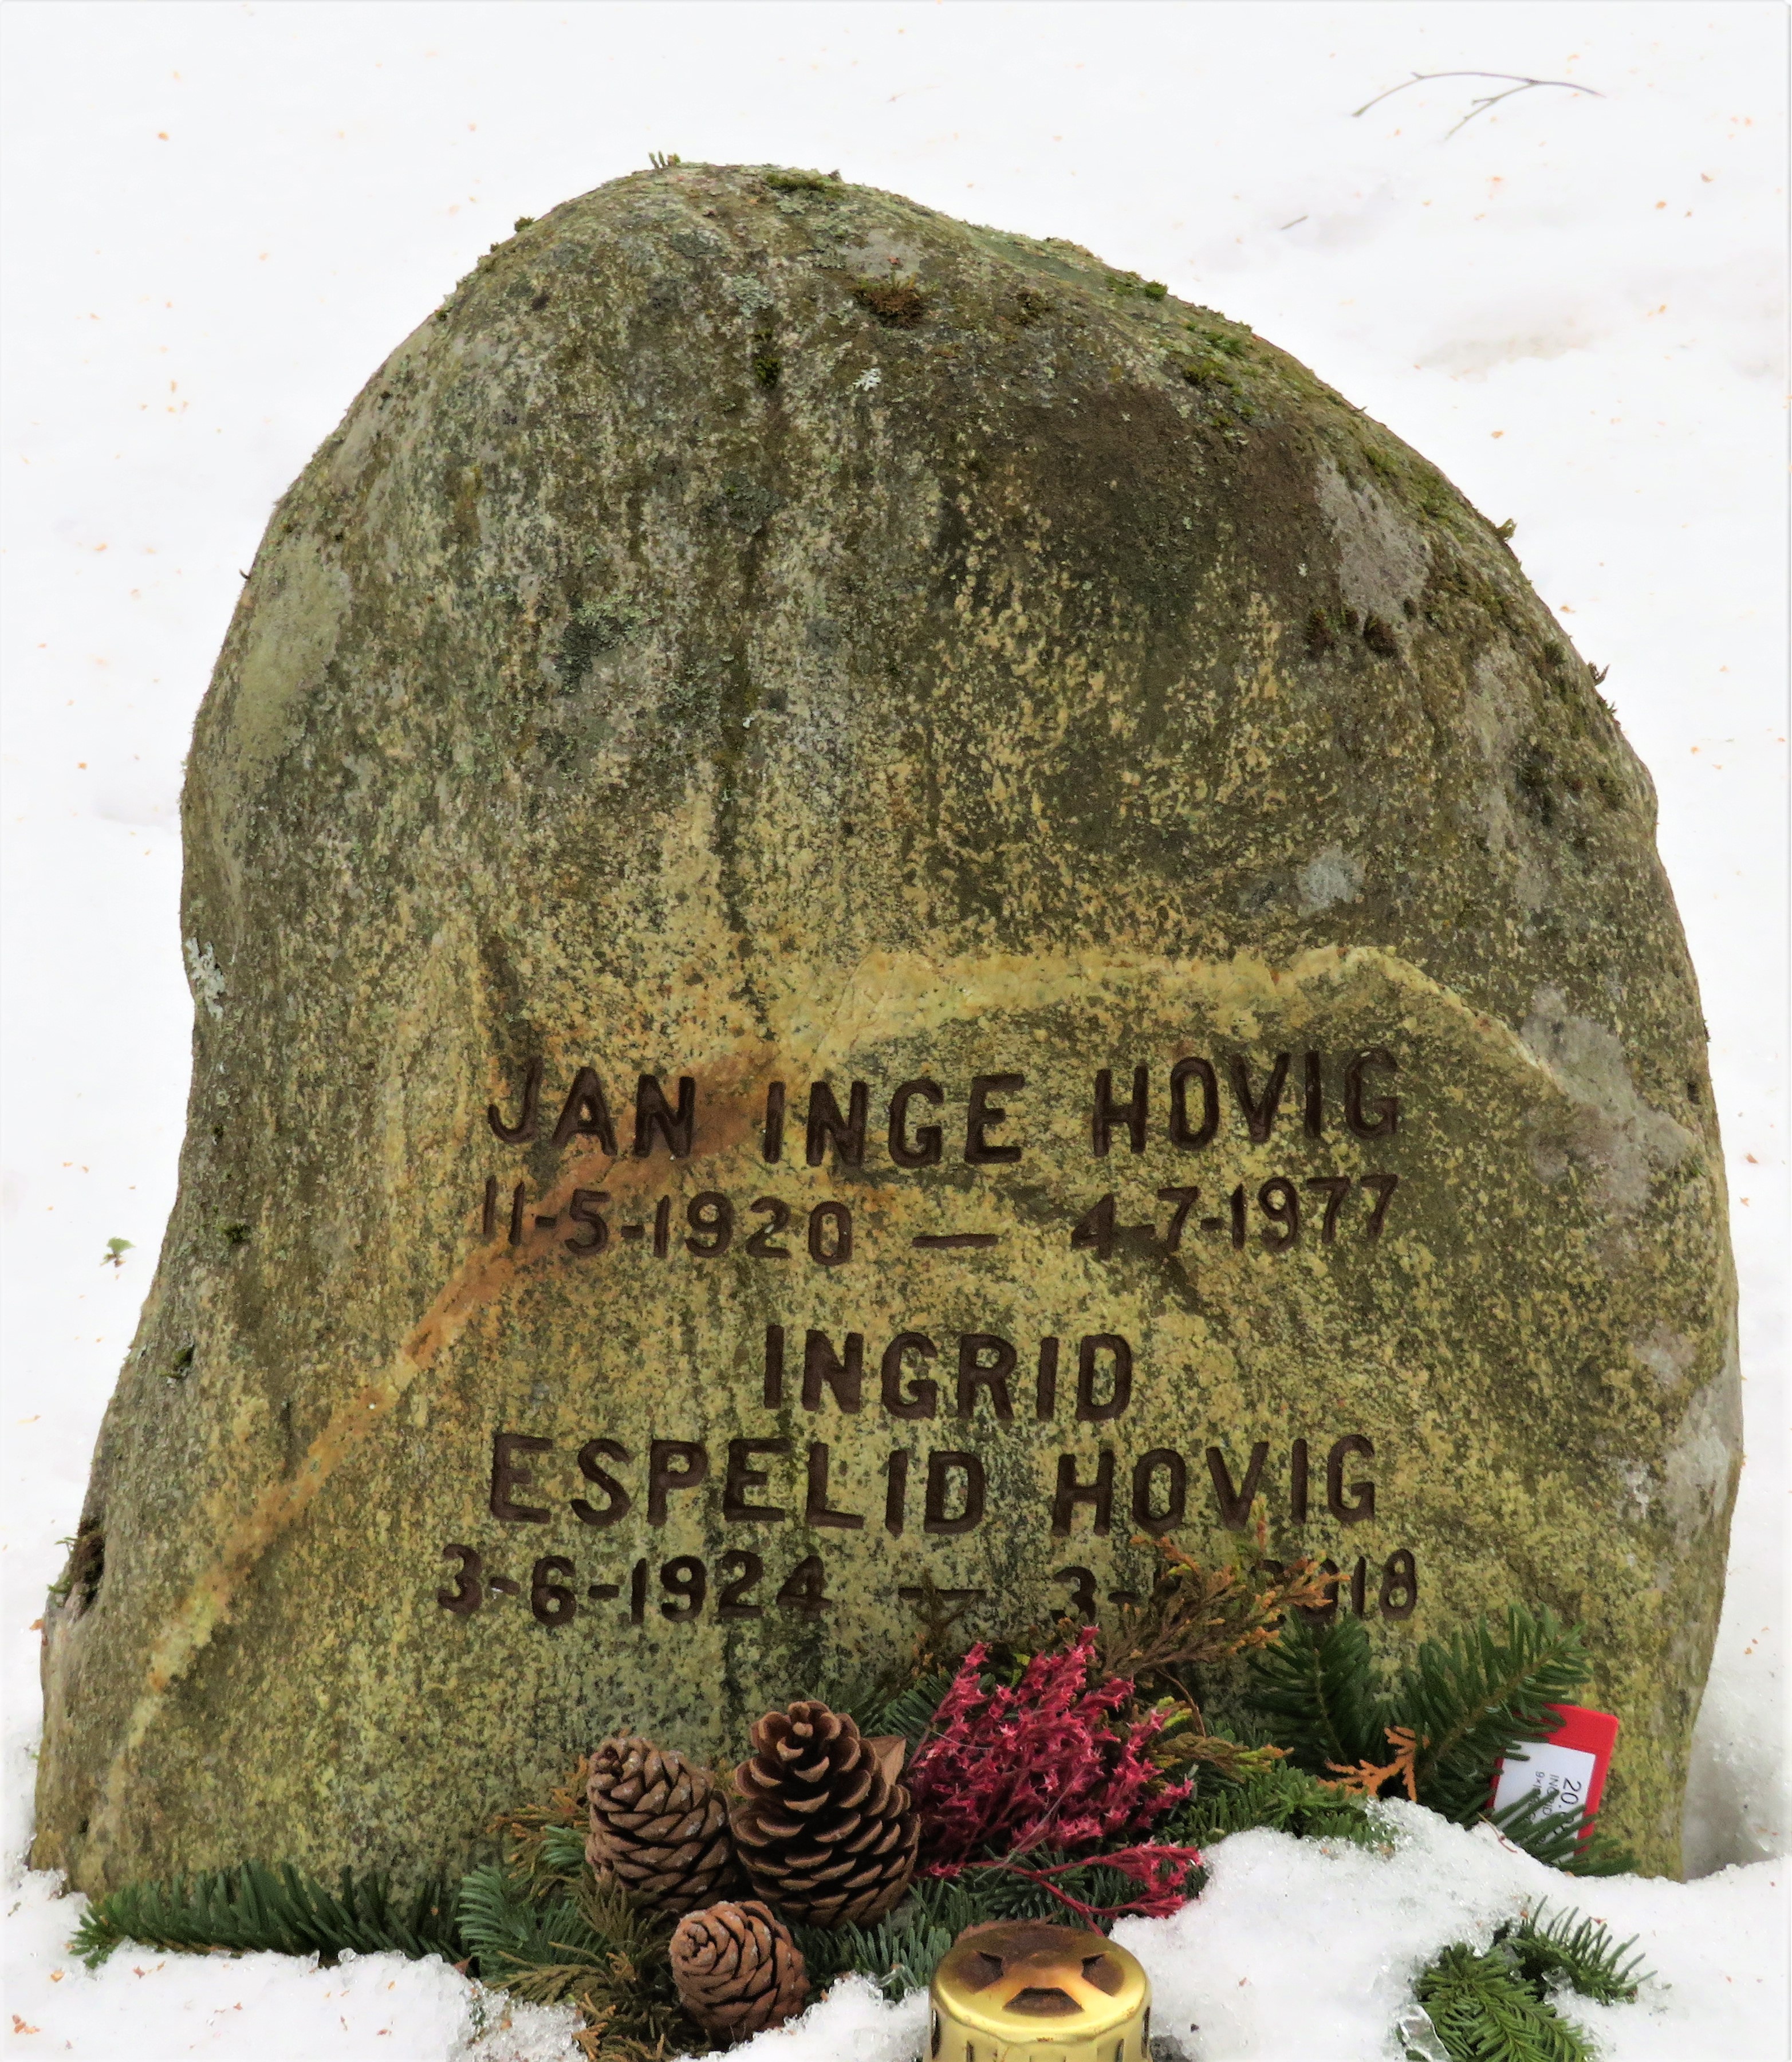 Gravminnet til arkitekt Jan Inge Hovig og ektefelle Ingrid Espelid Hovig.